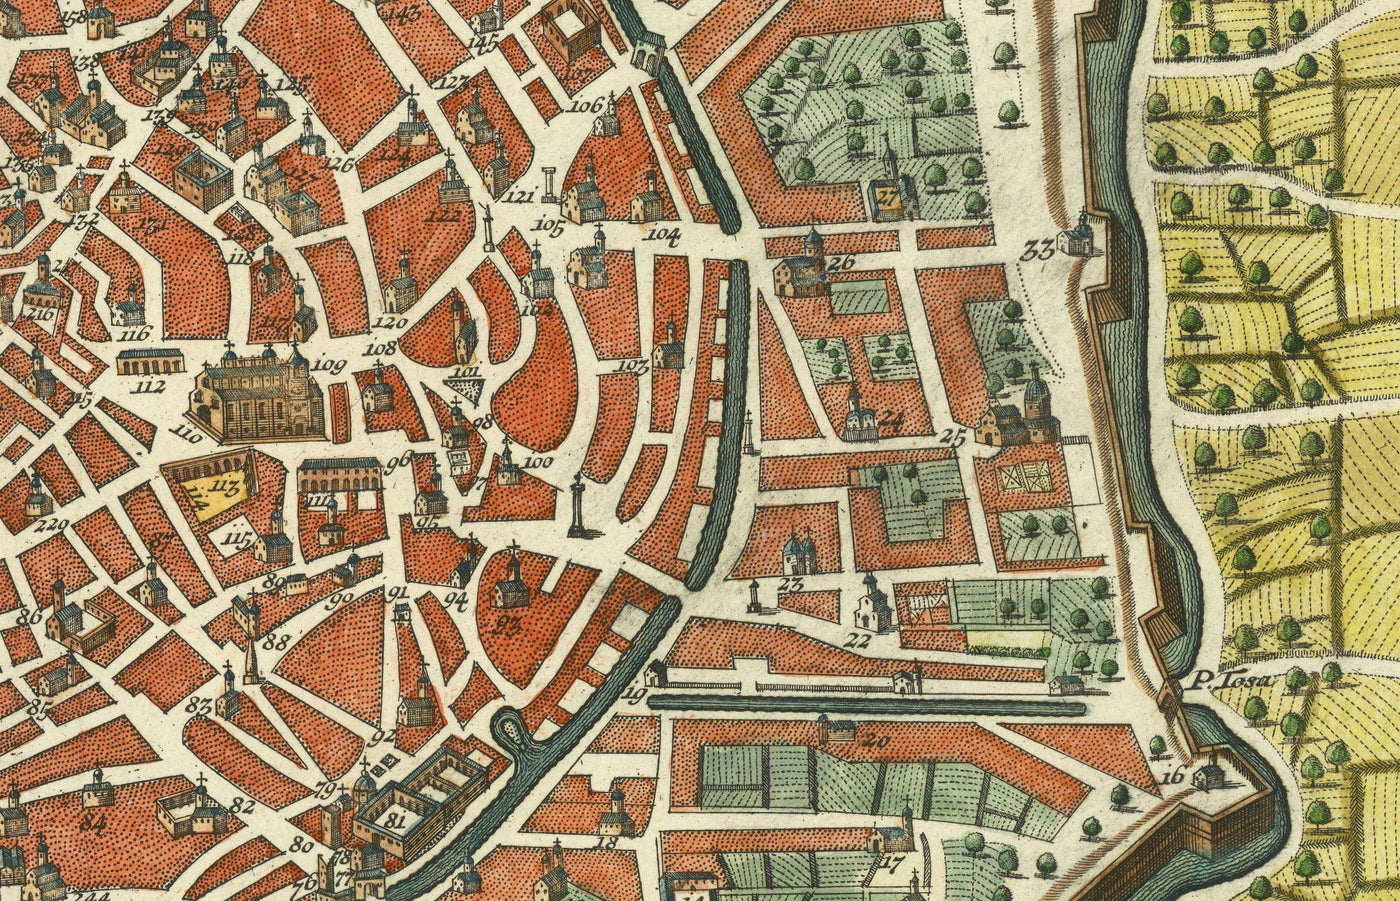 Mapa antiguo de Milán, Italia en 1730 por Seutter - San Carlo al Lazzaretto, Castillo Sforzesco, Duomo, Basílica di Sant'Ambrogio, Pinacoteca di Brera